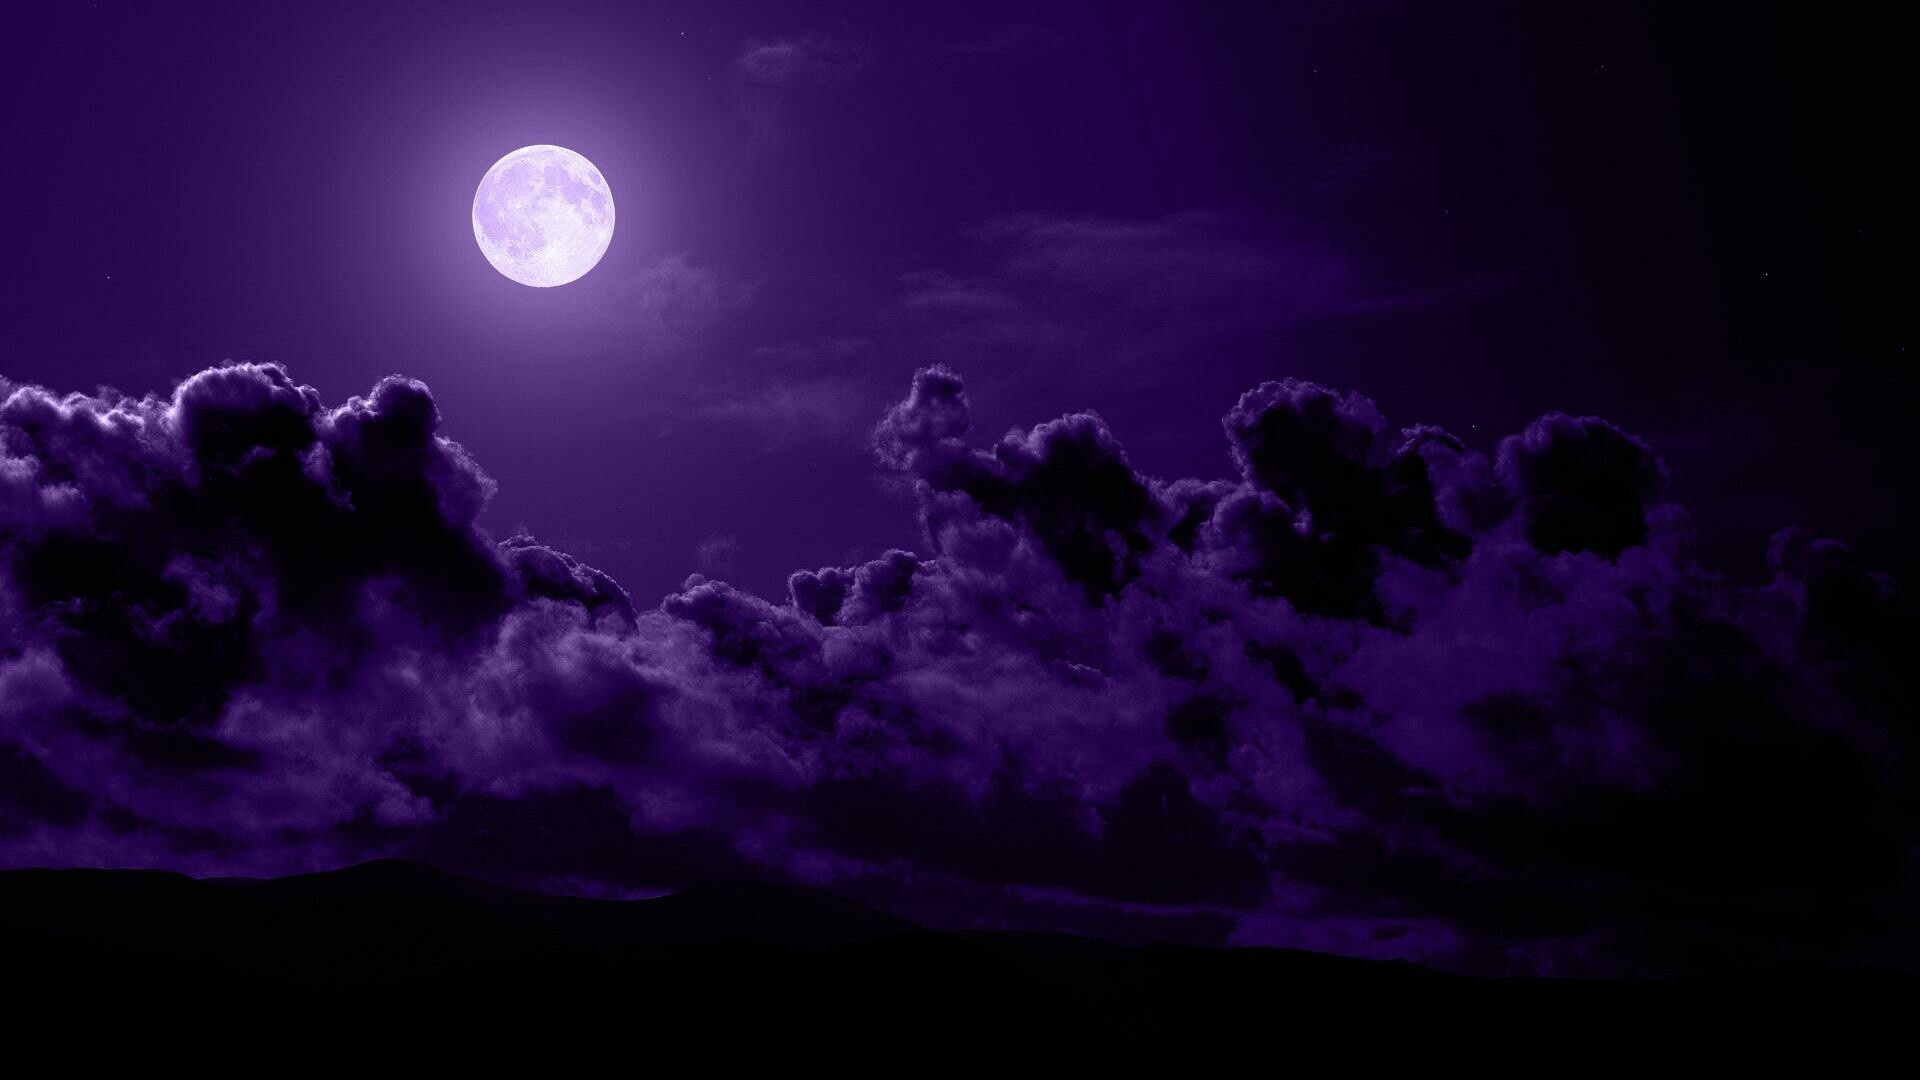 Moonlight: Moon illuminating the tops of clouds, Darkness. 1920x1080 Full HD Wallpaper.